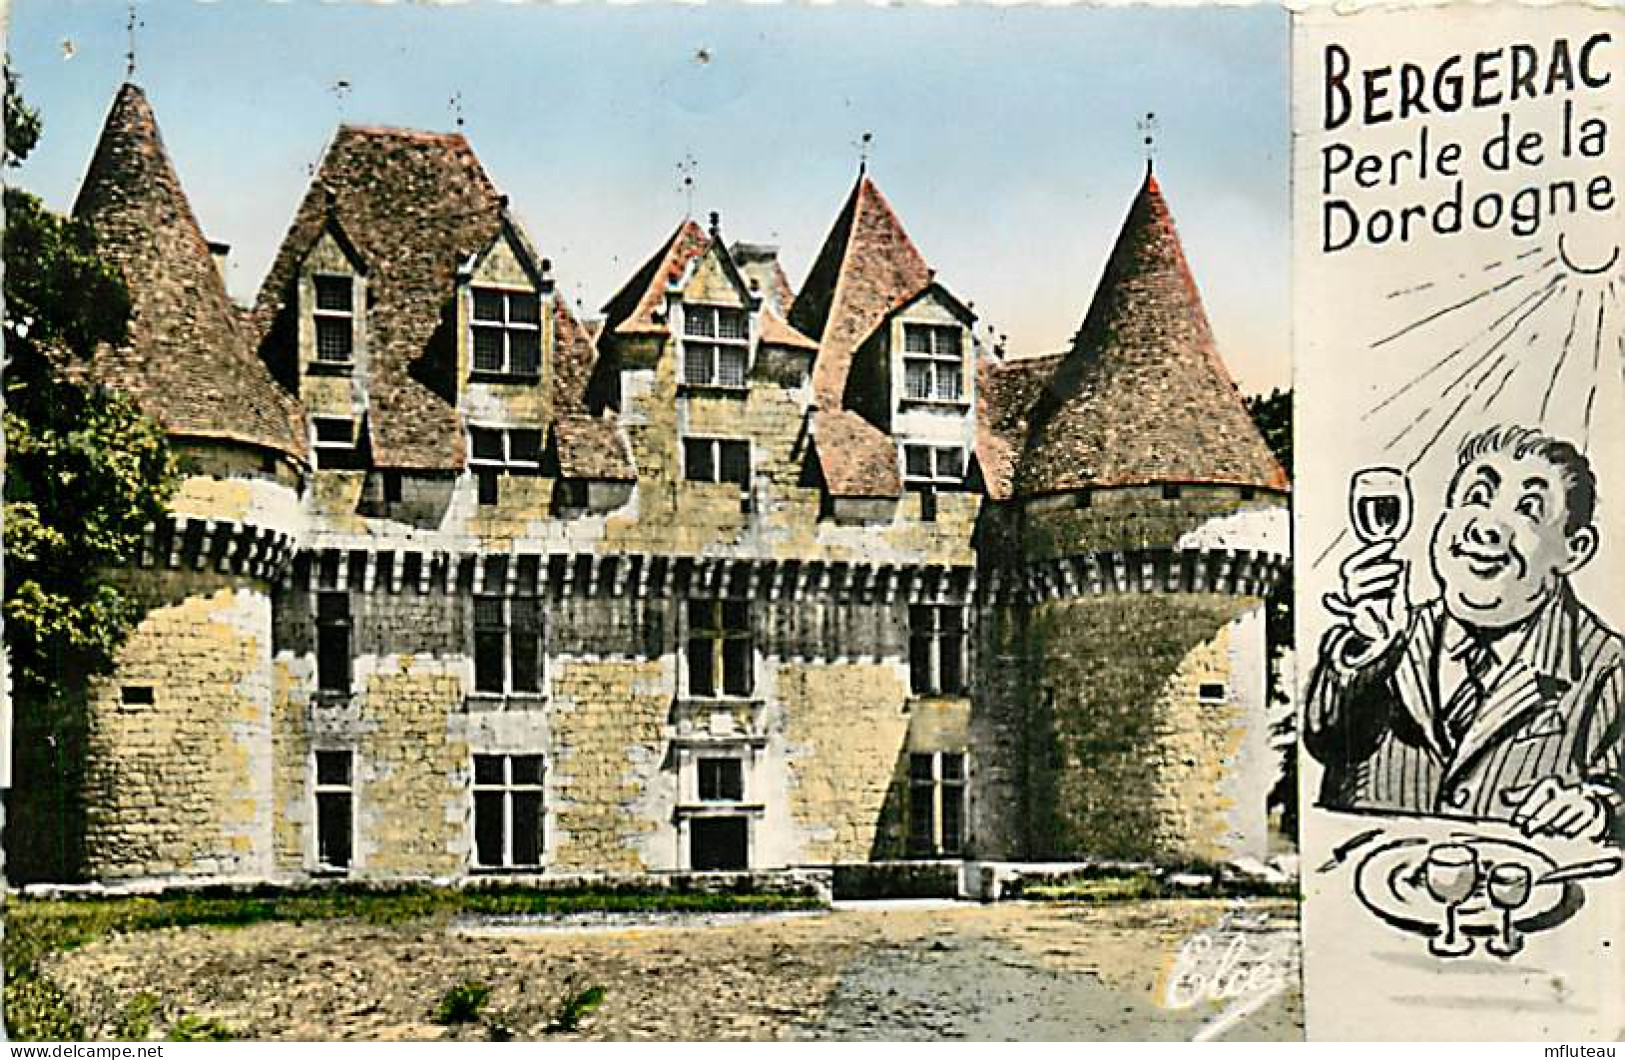 24* BERGERAC  Chateau Monbazillac  (CPSM Petit Format)          MA90,0390 - Bergerac